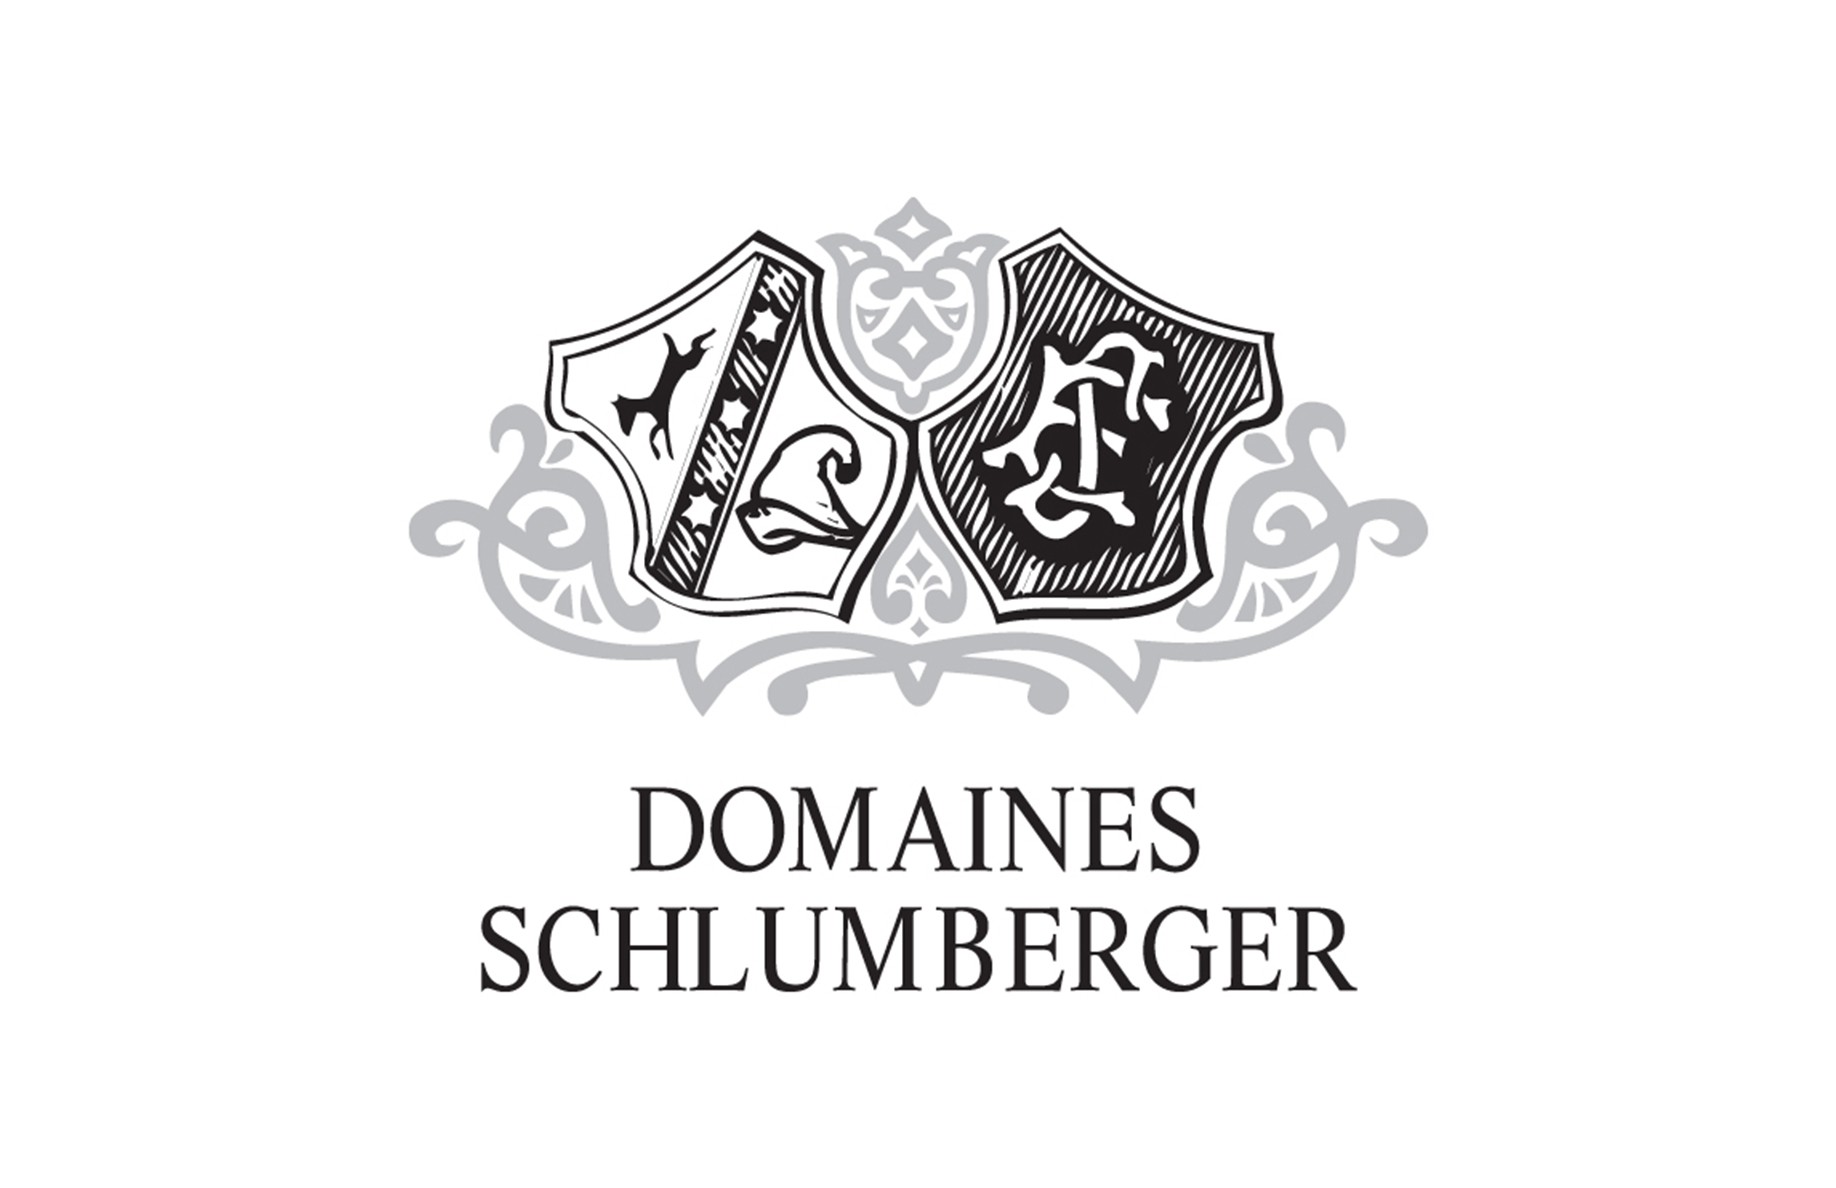 DOMAINES SCHLUMBERGER